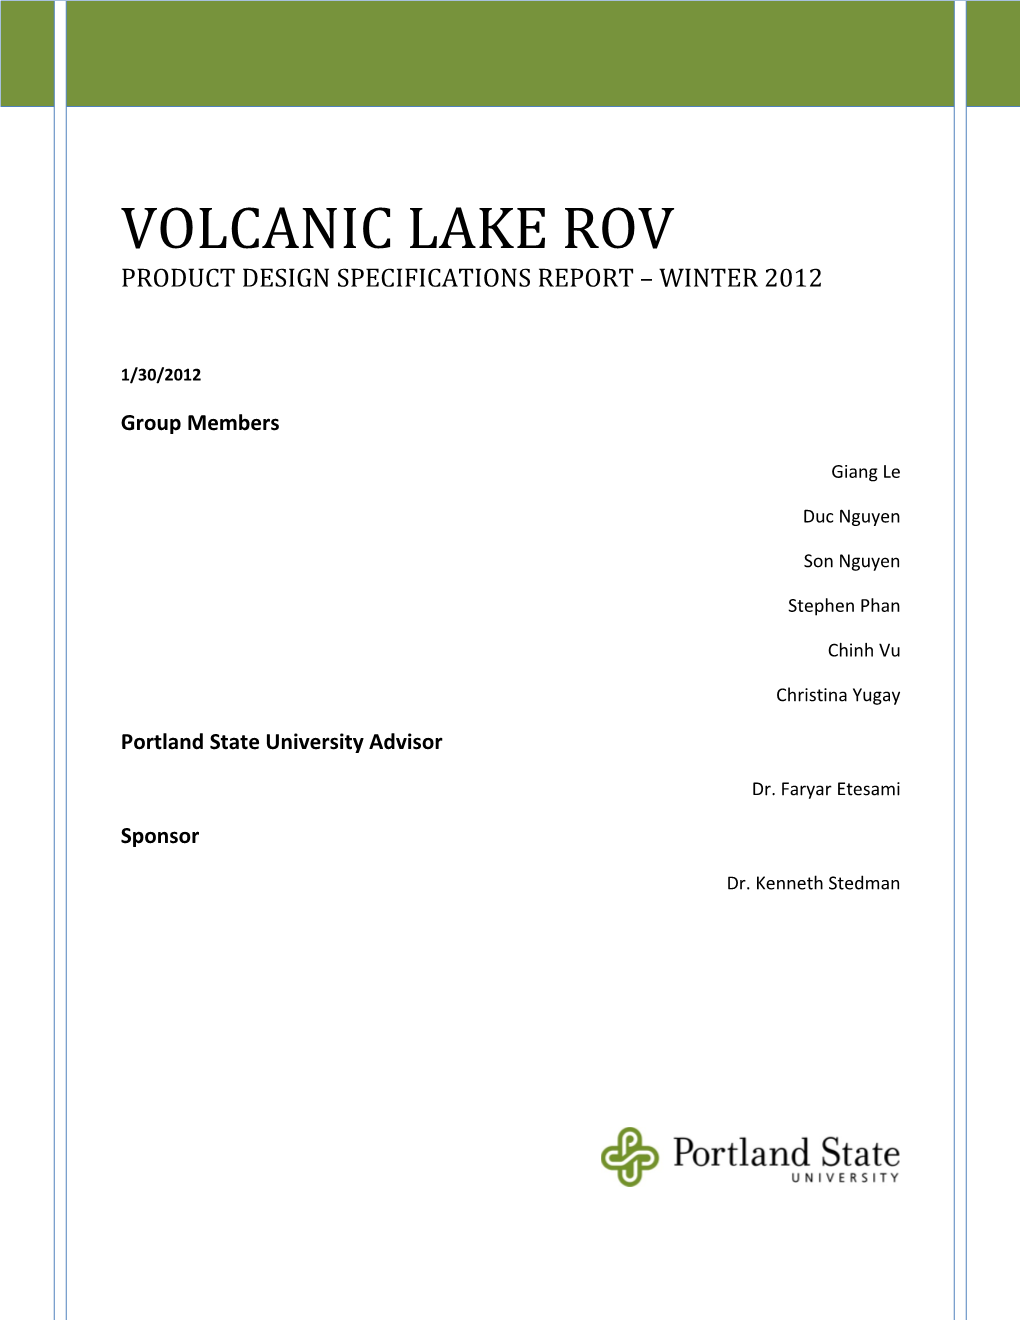 Volcanic Lake Rov